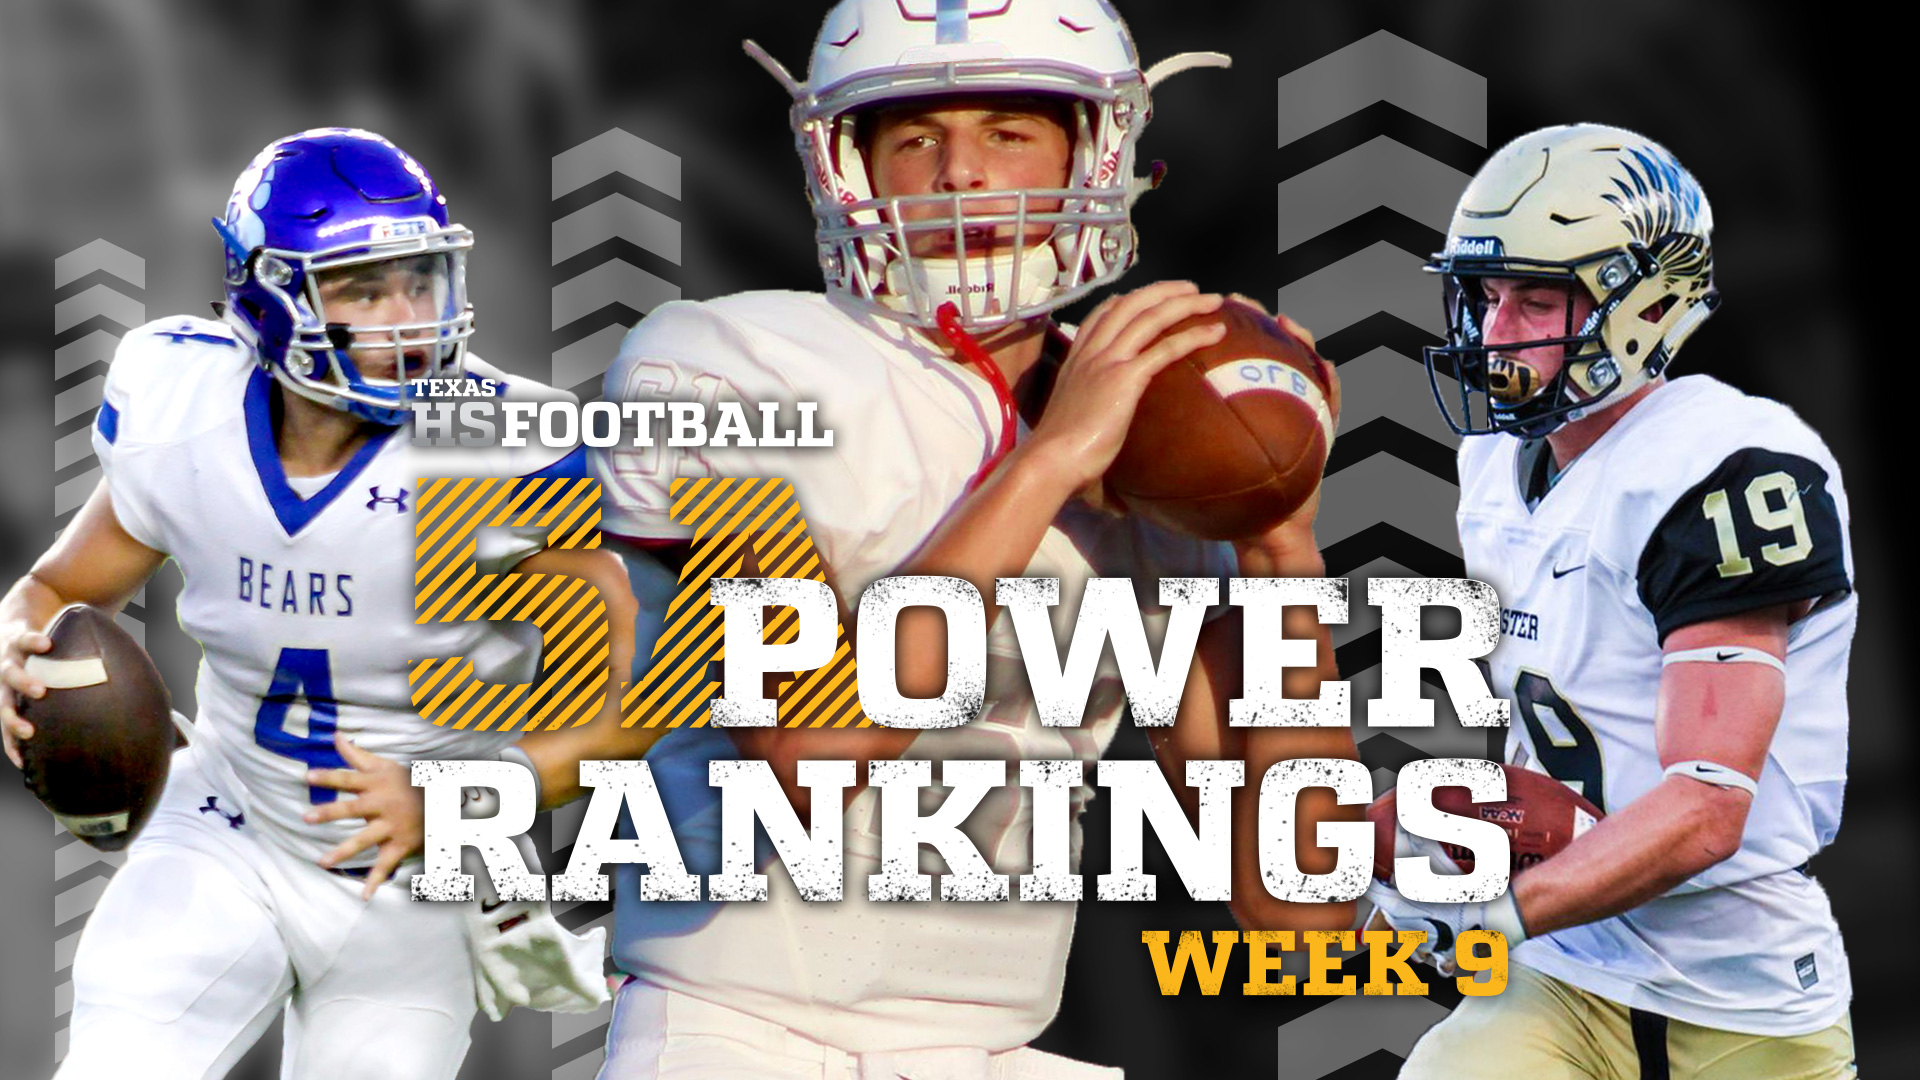 Texas High School Football Power Rankings 5A Week 9 Texas HS Football